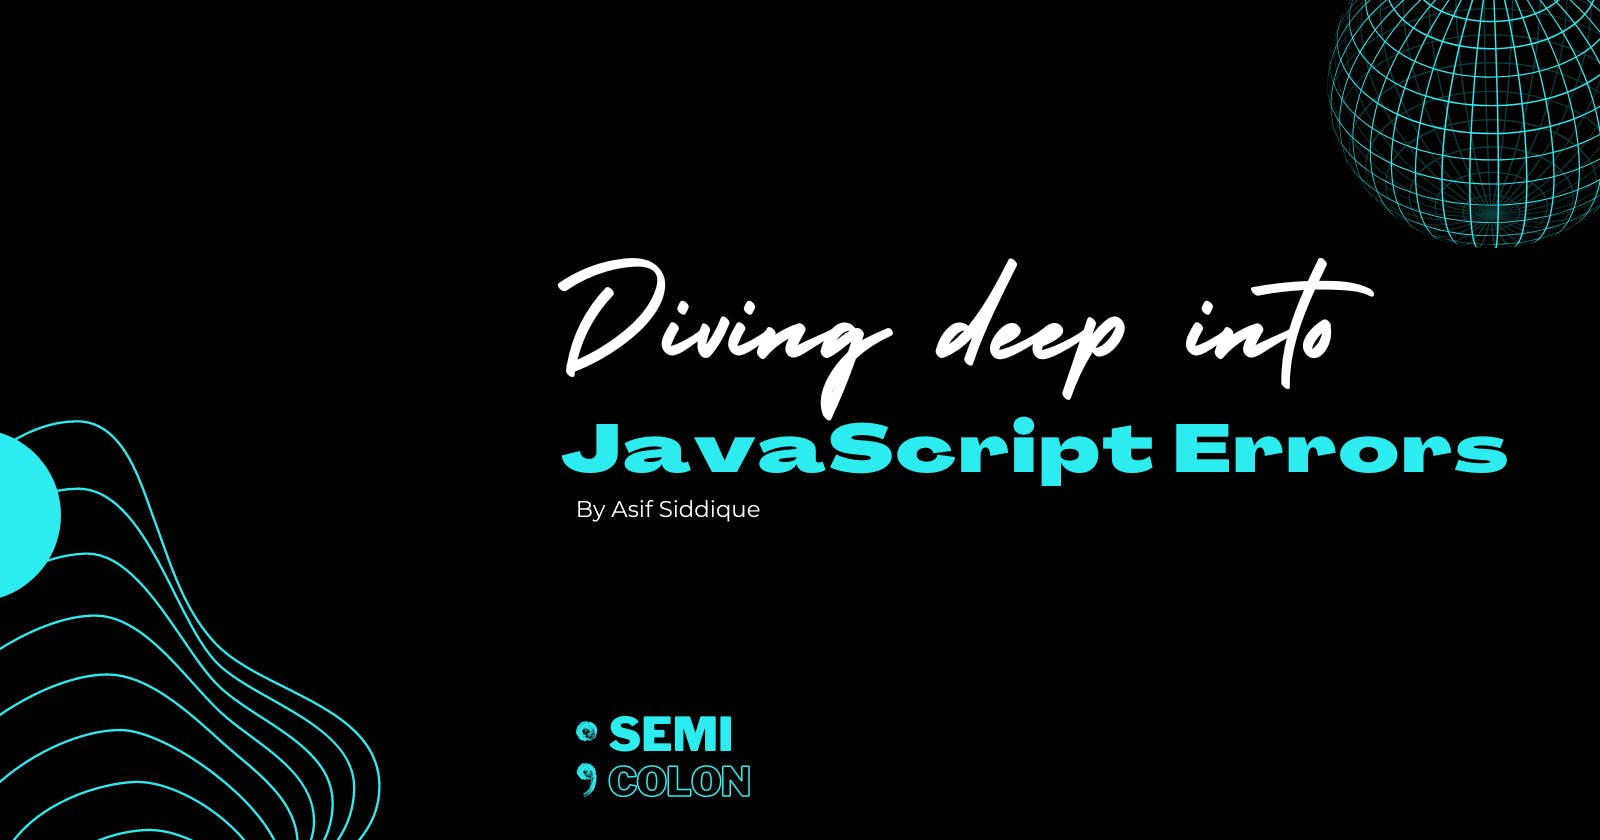 Diving deep into JavaScript errors.